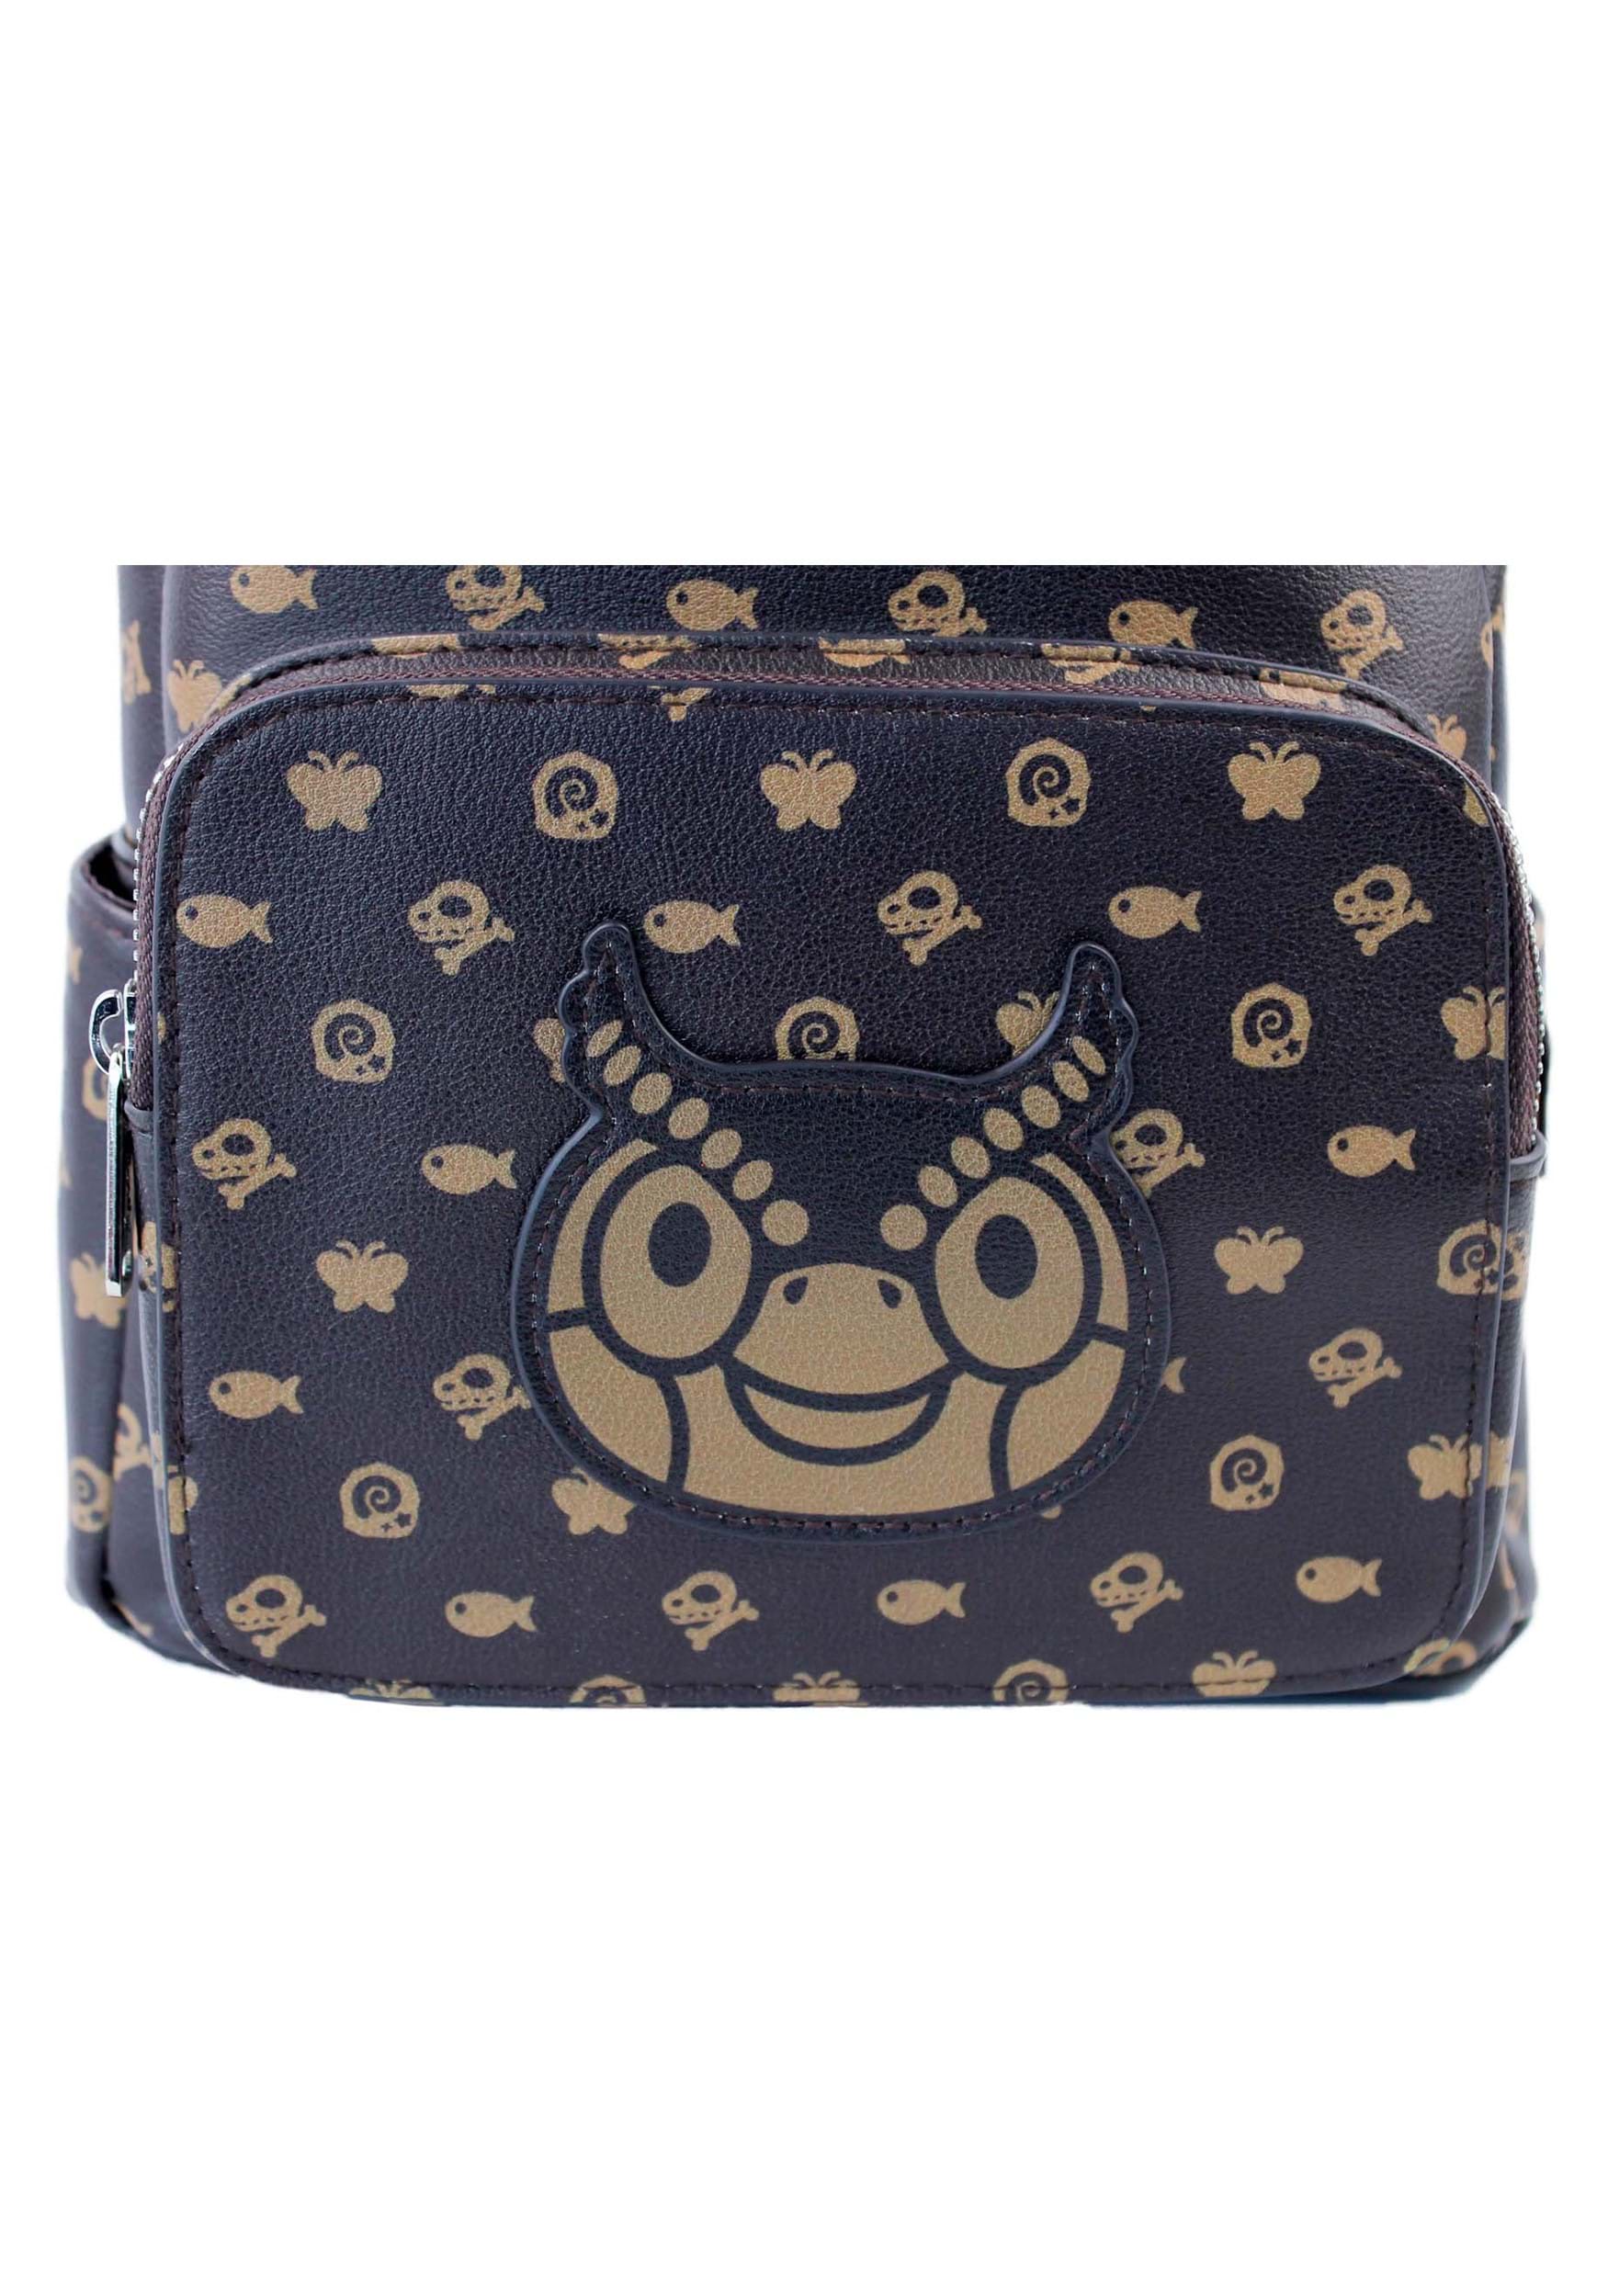 Blathers Animal Crossing Cakeworthy Backpack